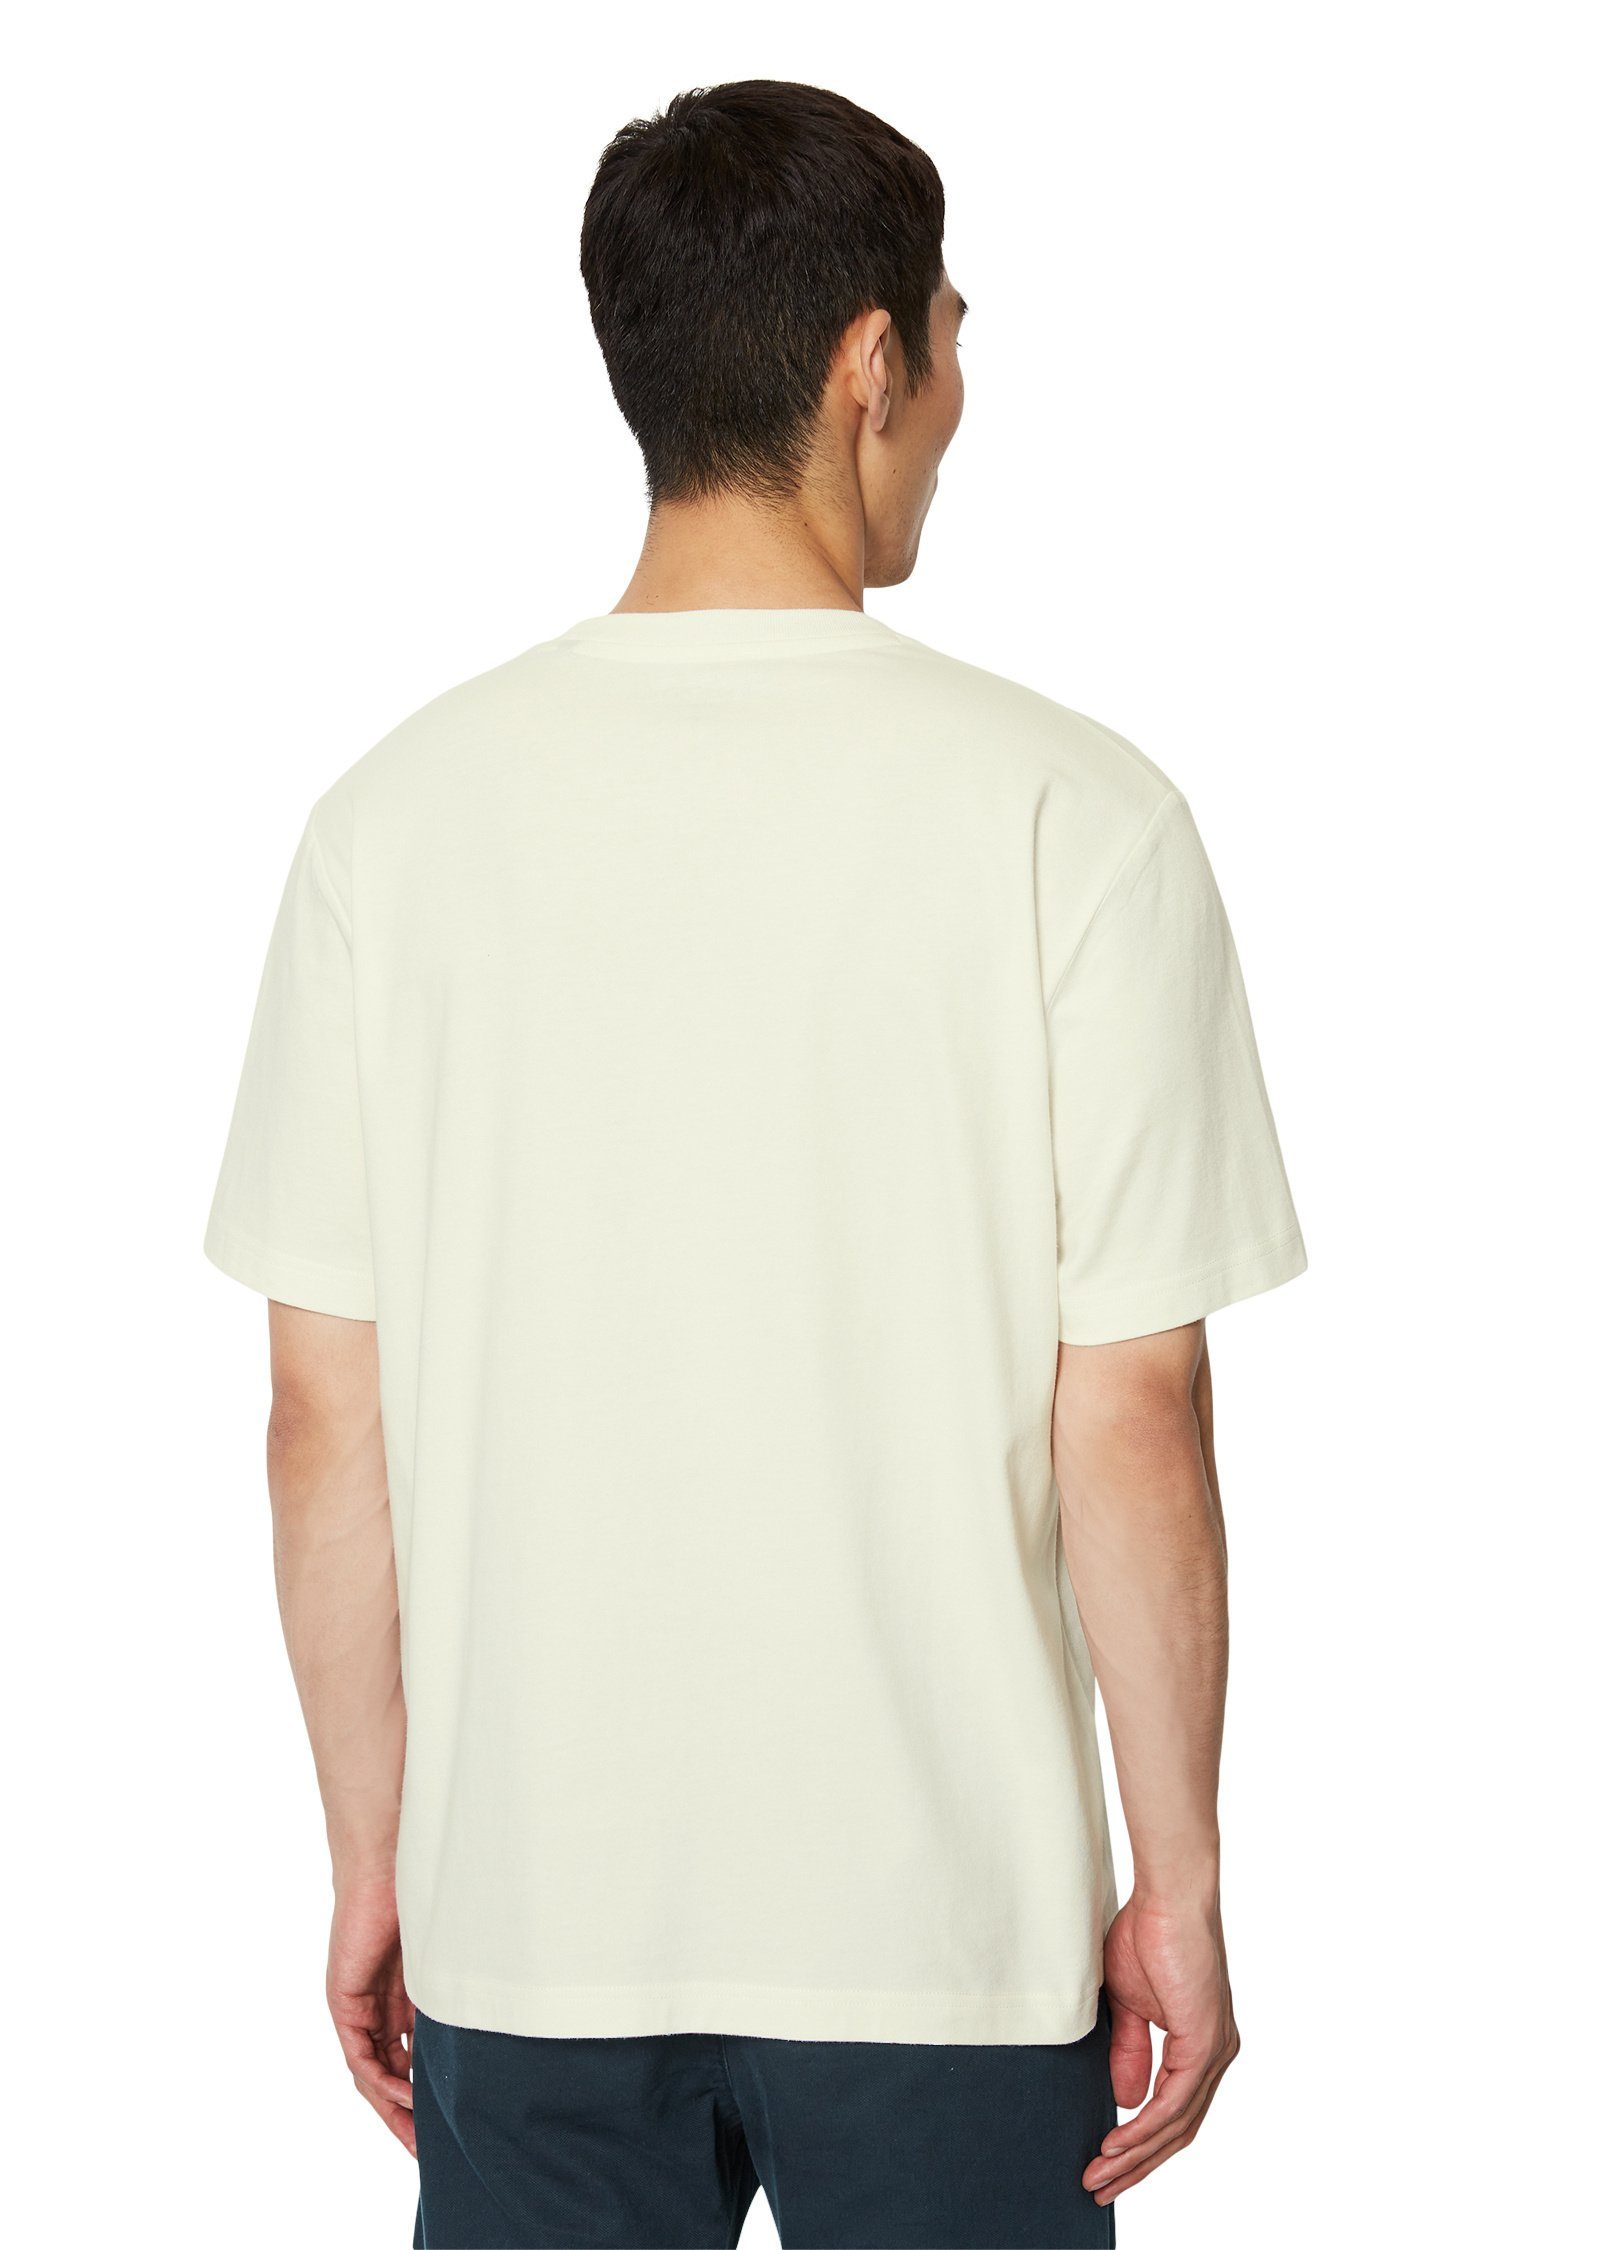 Bio-Baumwoll-Jersey aus Marc wollweiß O'Polo mittelschwerem T-Shirt